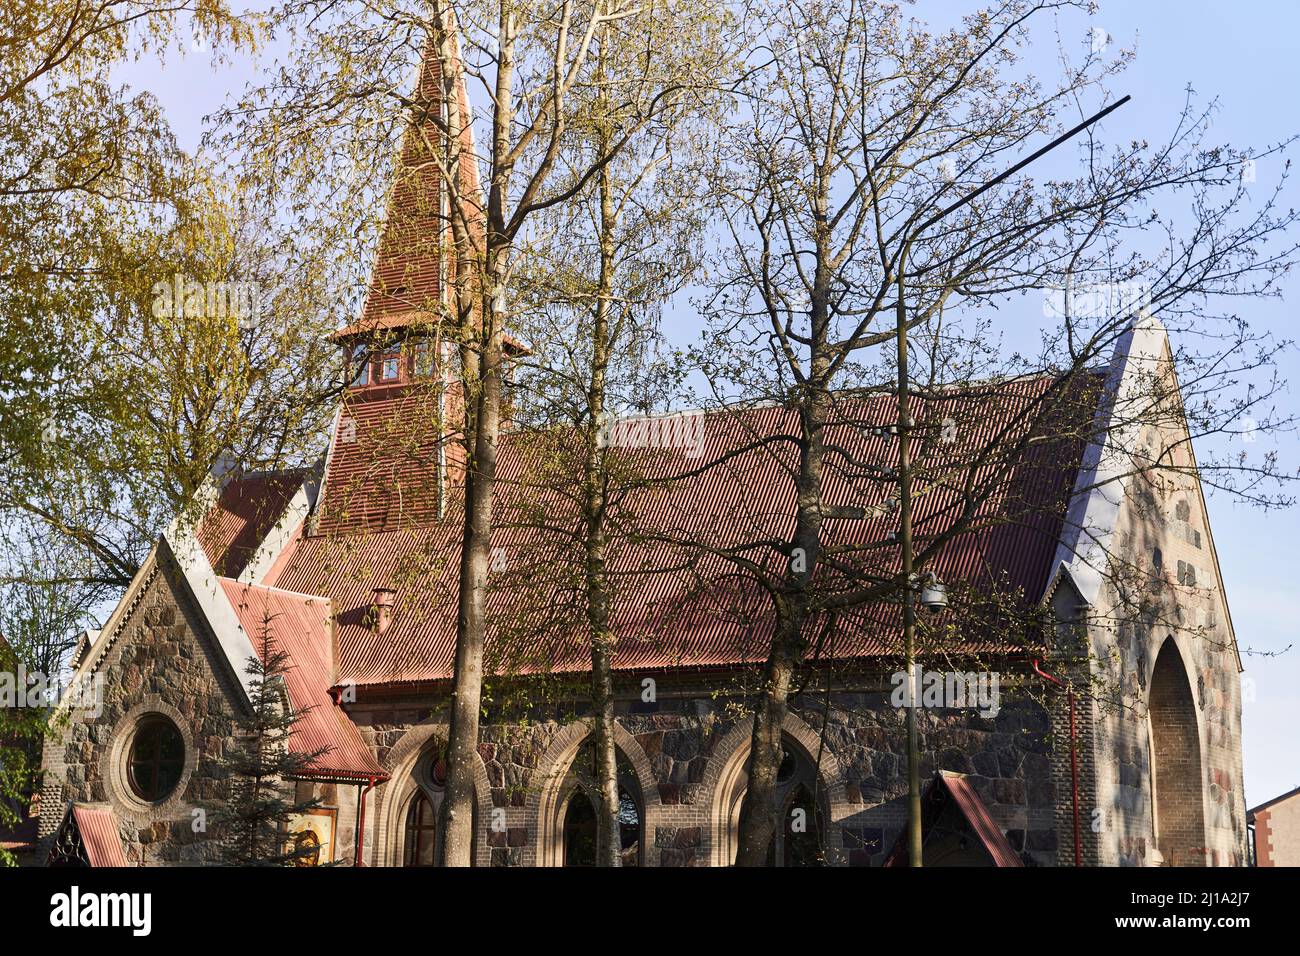 Kirch Palmniken. Regione di Kaliningrad. Villaggio Yantarniy. Foto di alta qualità. Foto Stock